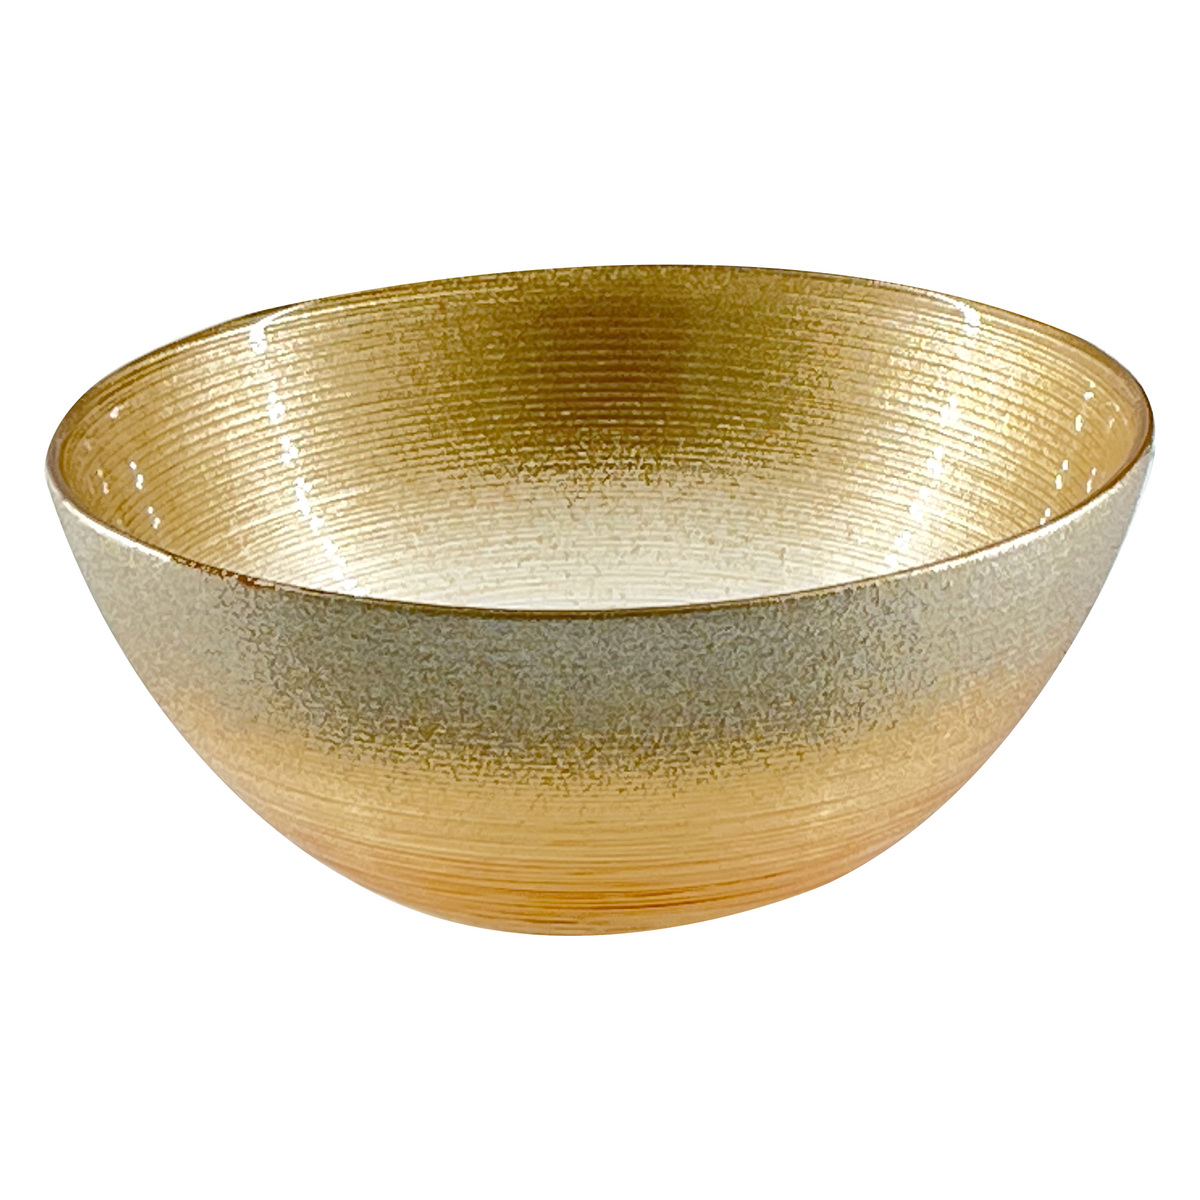 Glascom Decorative Soup Bowl, 15 cm, ARES0549